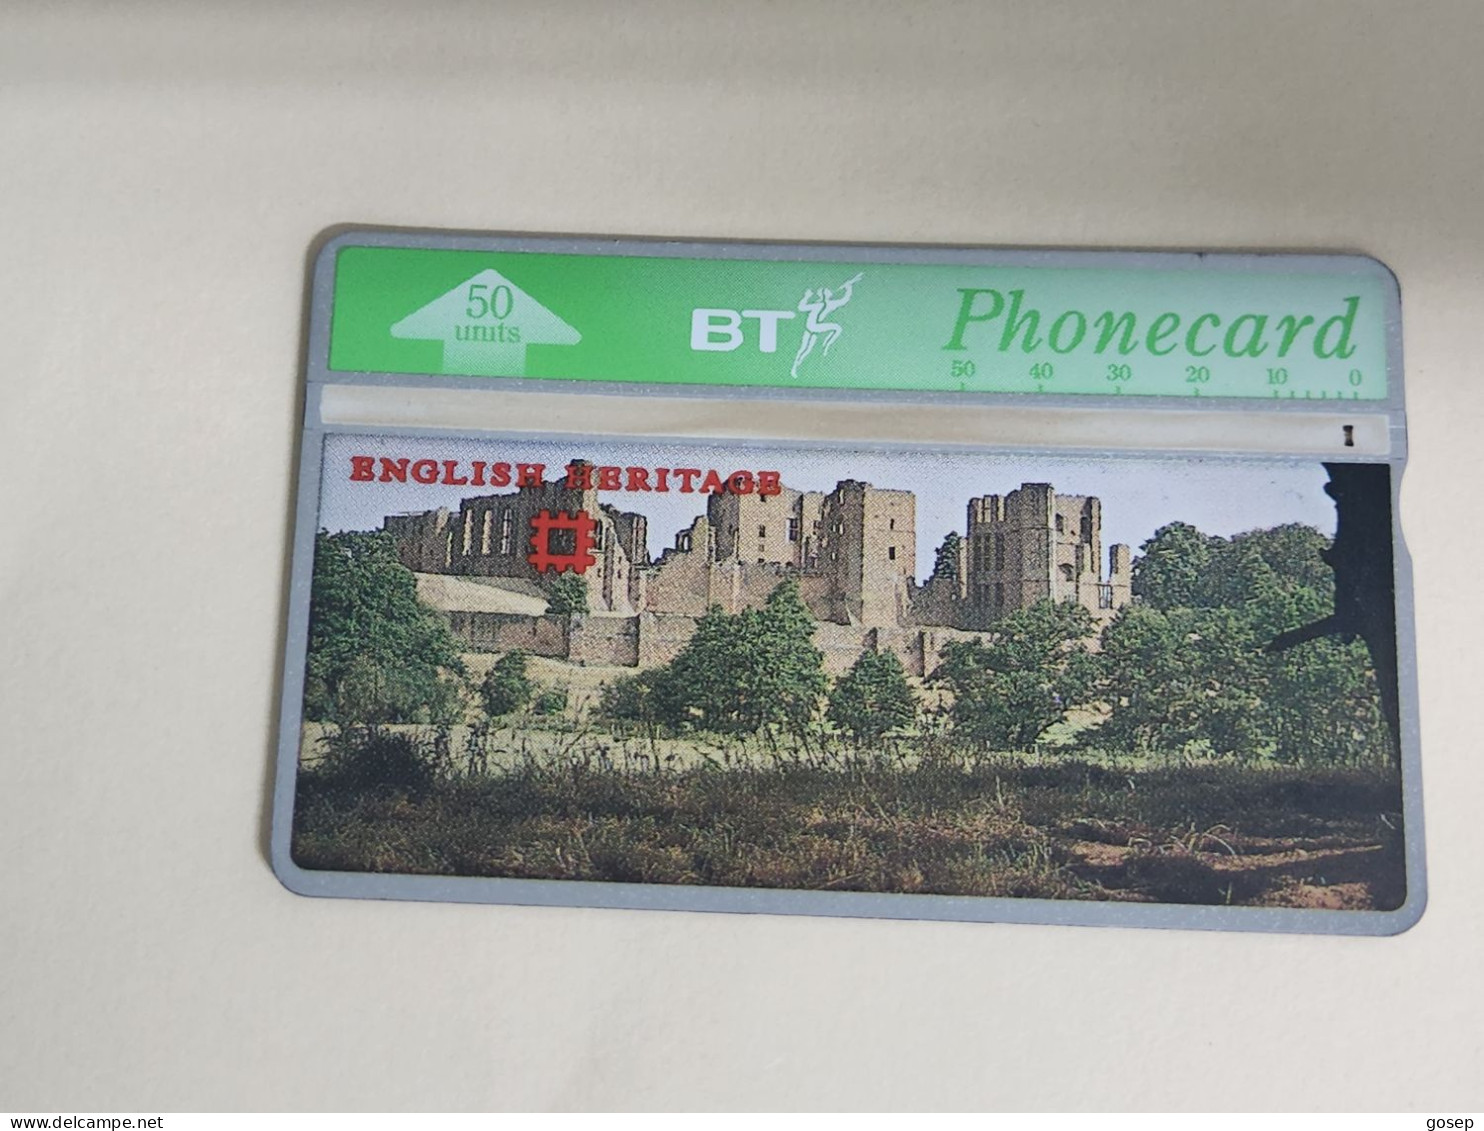 United Kingdom-(BTA108)-HERITAGE-Kenilworth Castle-(182)(50units)(528D70525)price Cataloge3.00£-used+1card Prepiad Free - BT Emissions Publicitaires